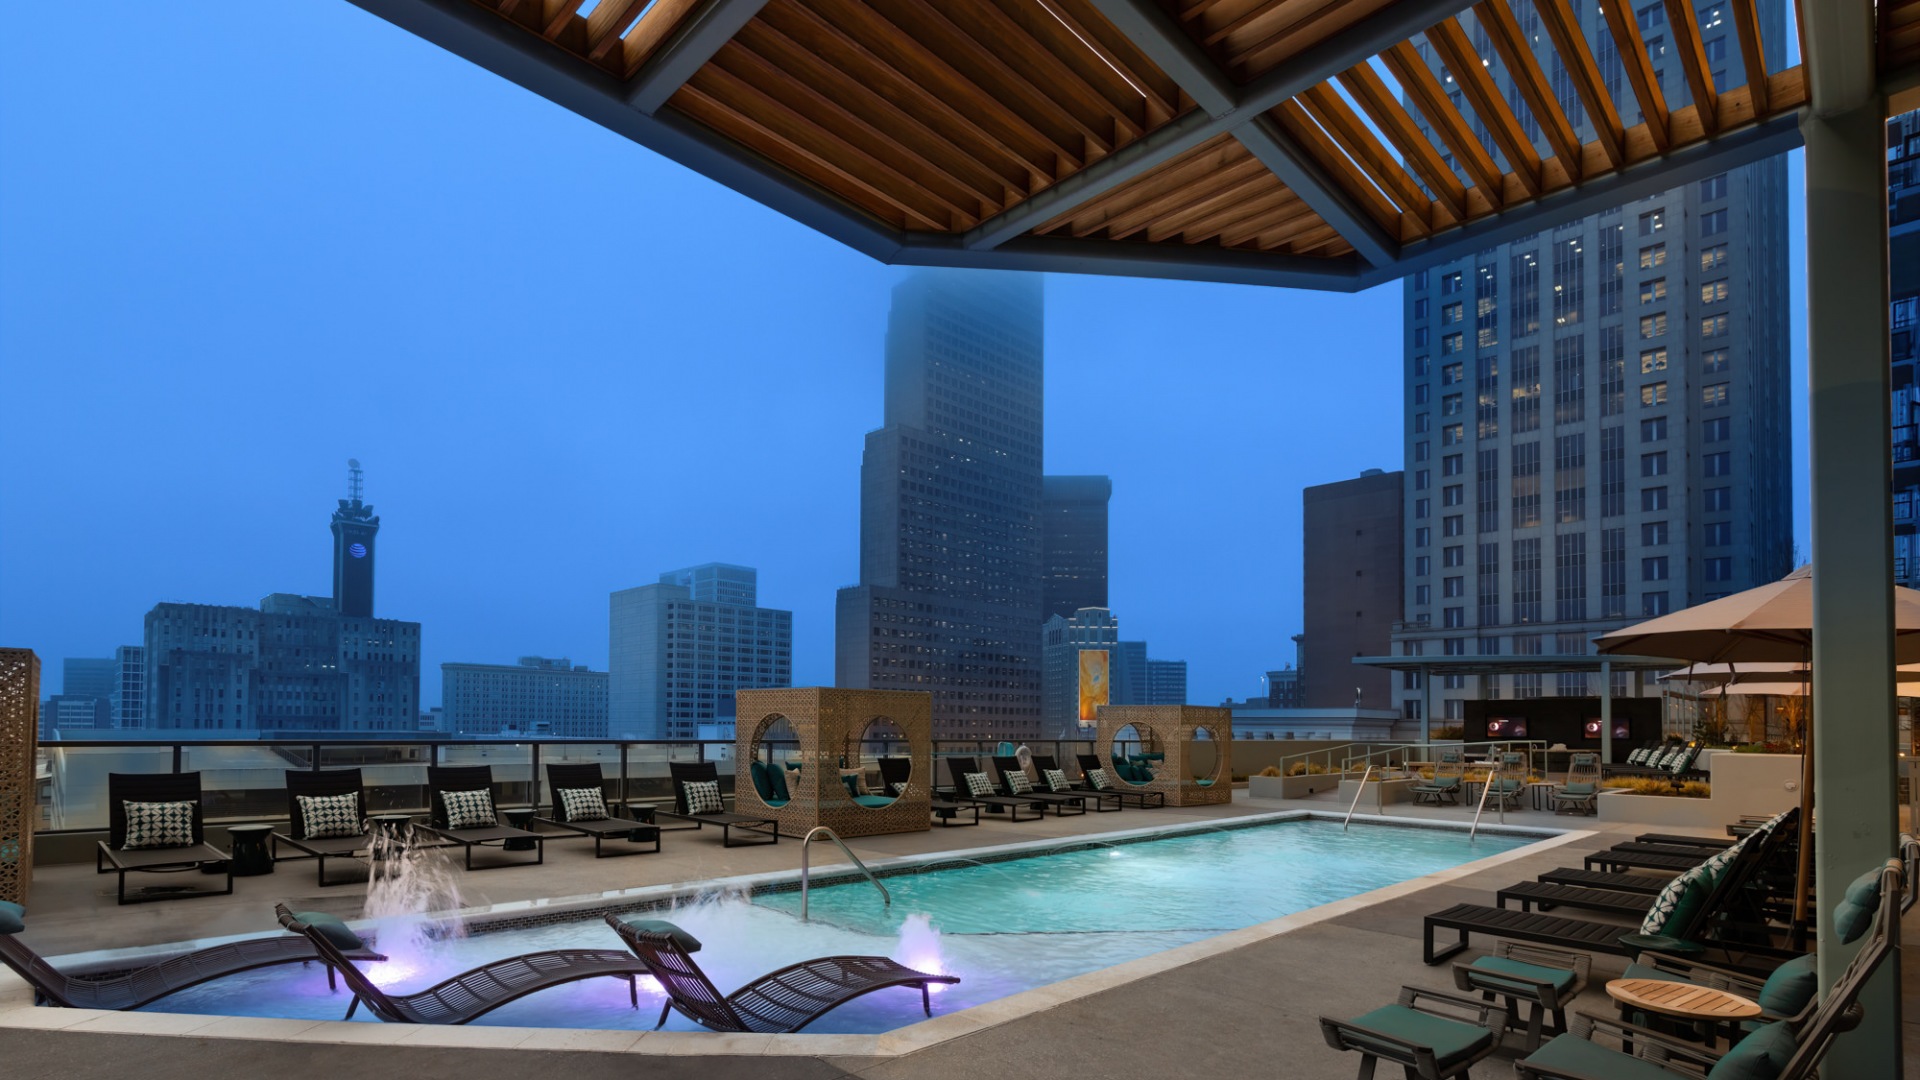 Peachtree pool deck evening fog downtown Atlanta